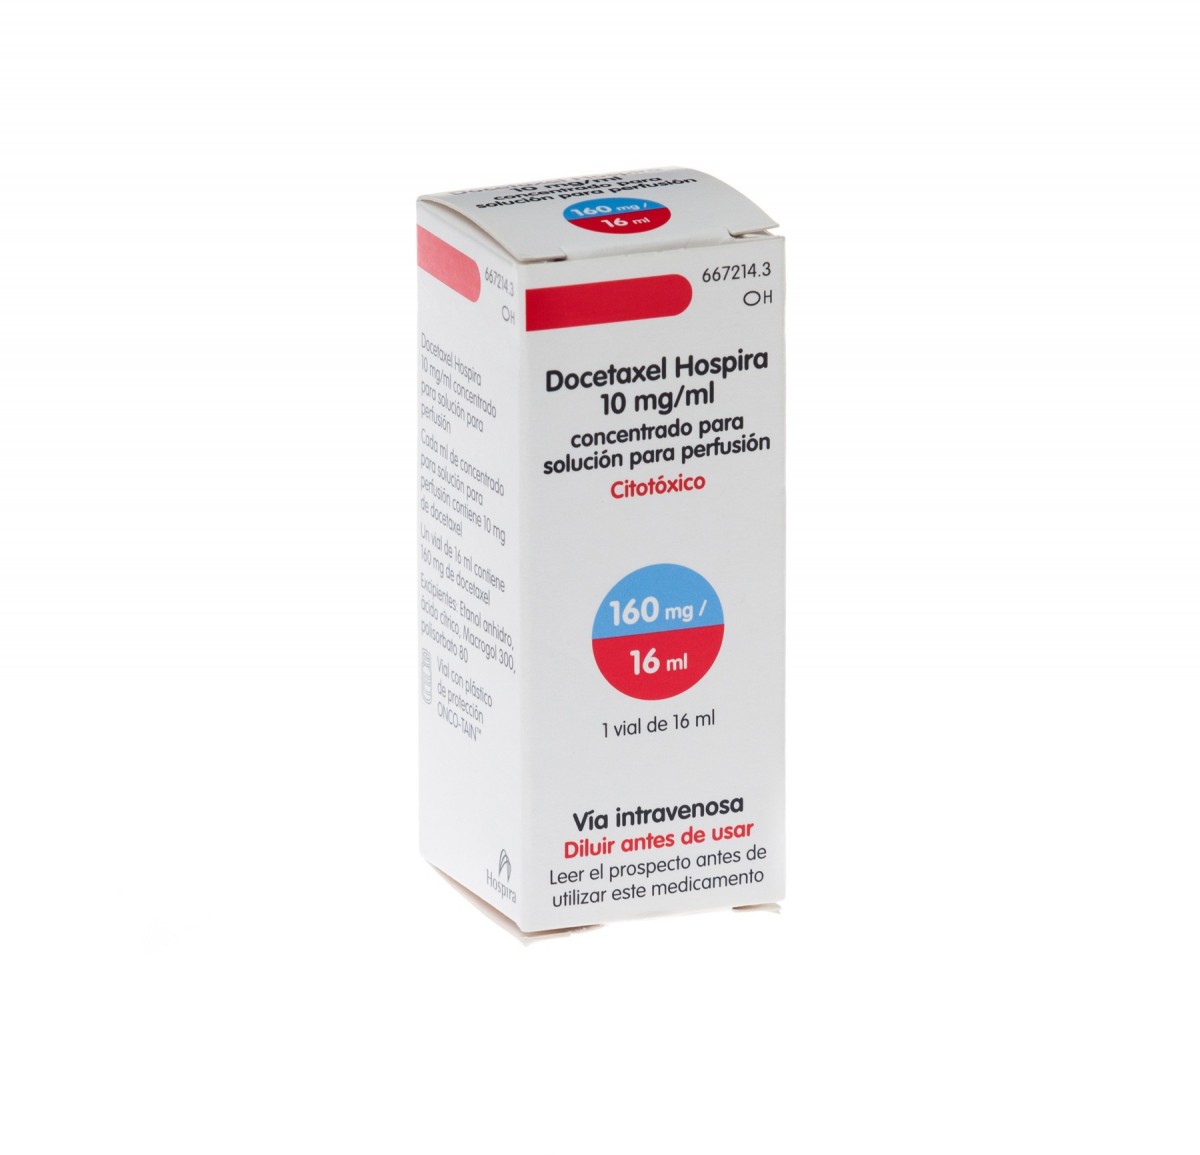 DOCETAXEL HOSPIRA 10 mg/ml CONCENTRADO PARA SOLUCION PARA PERFUSION, 1 vial de 8 ml fotografía del envase.